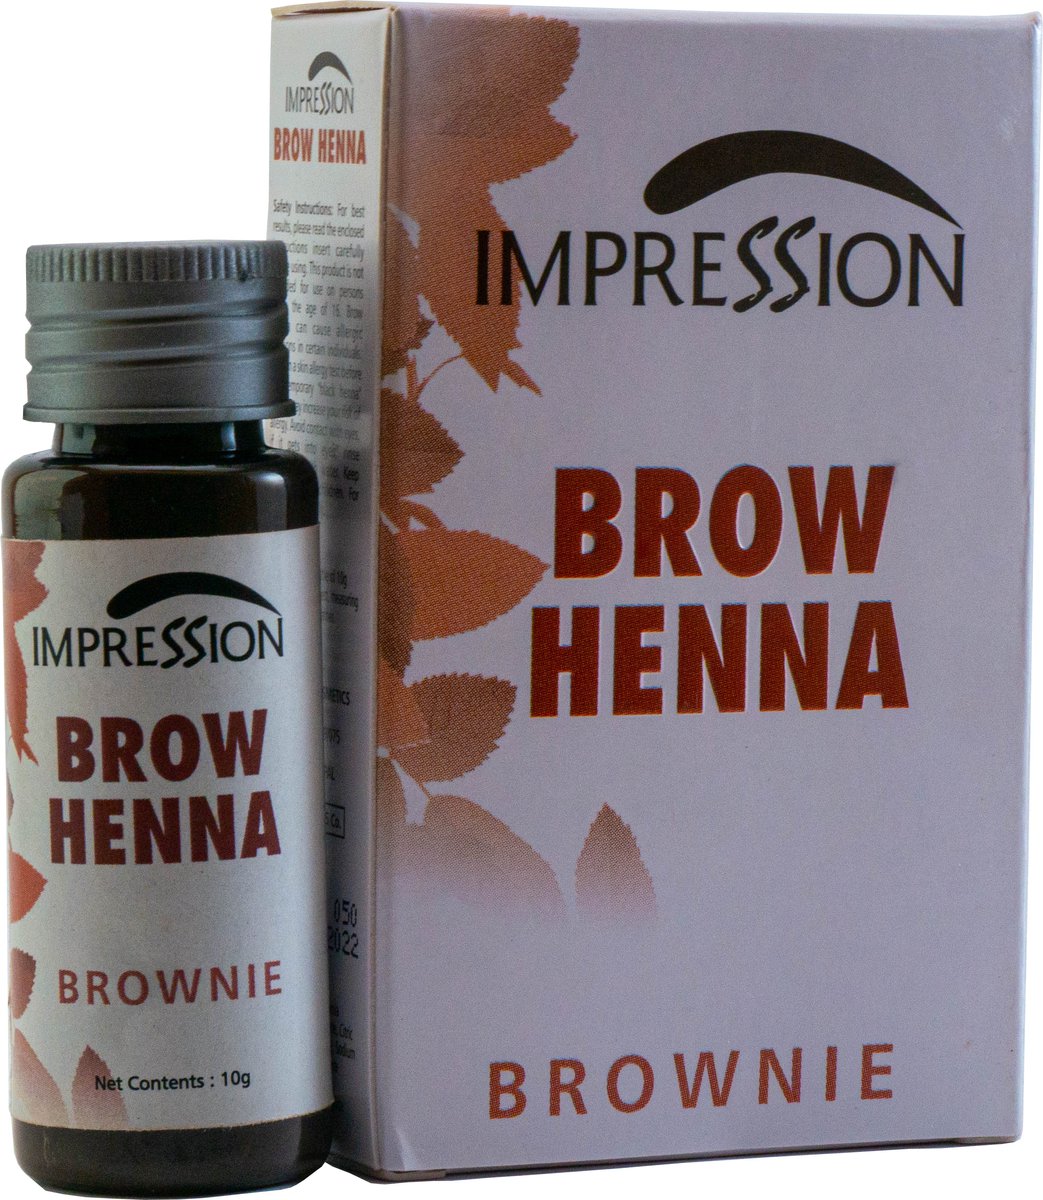 Impression Henna Wenkbrauwverf | Brownie | Brow Henna | Goed voor meer dan 20 behandelingen